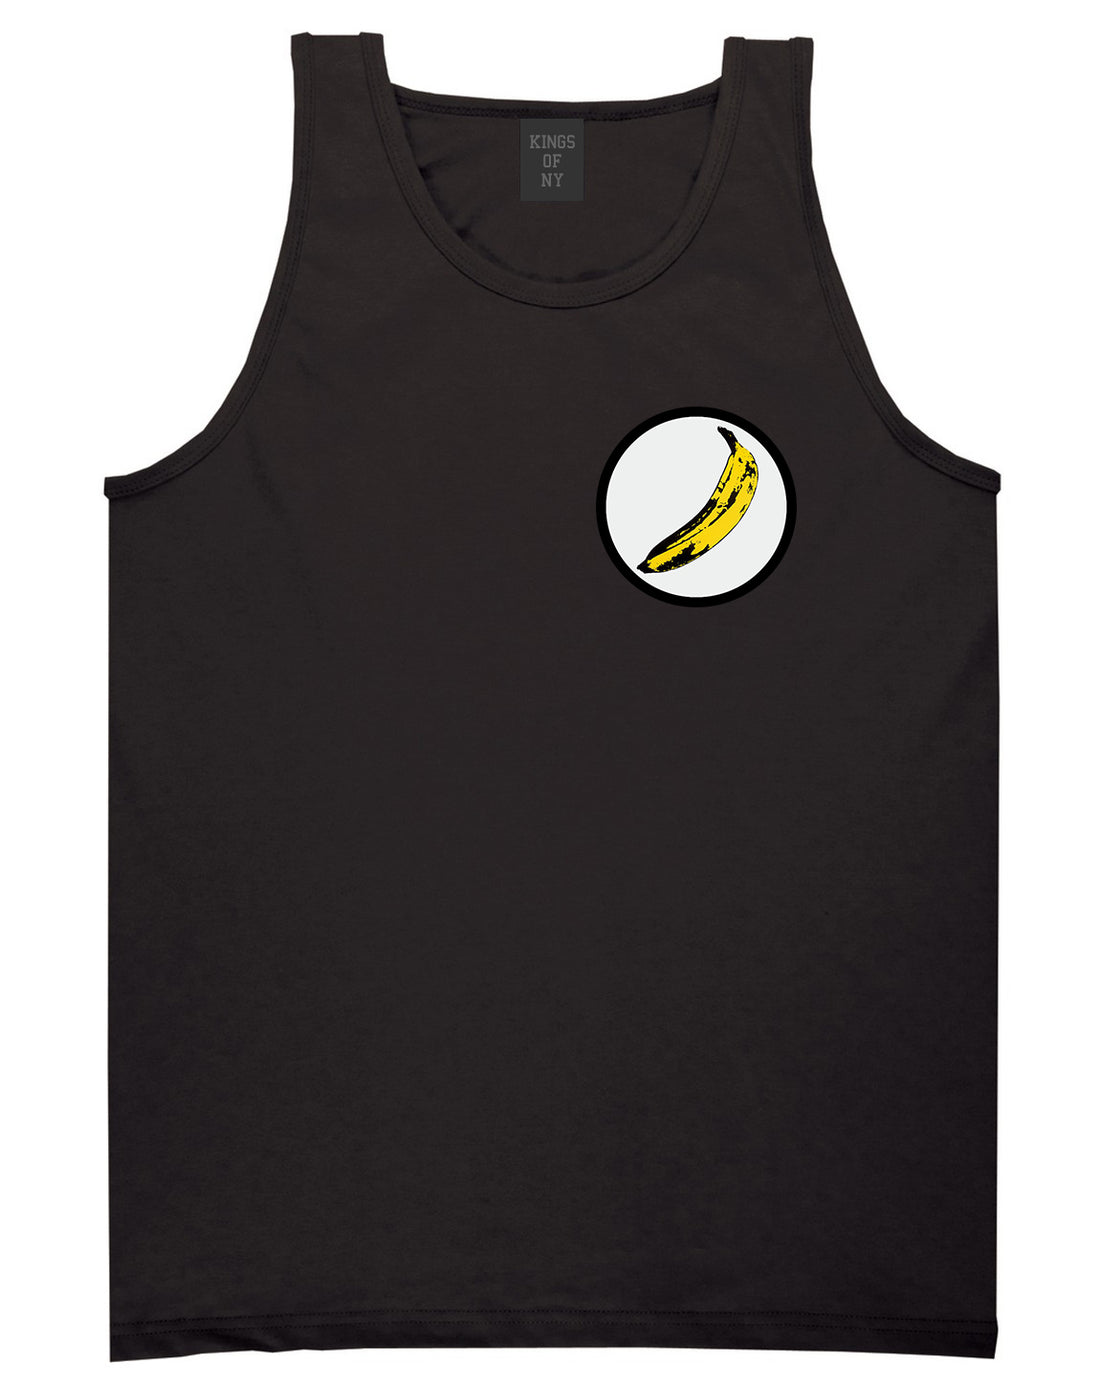 Banana Chest Black Tank Top Shirt by Kings Of NY